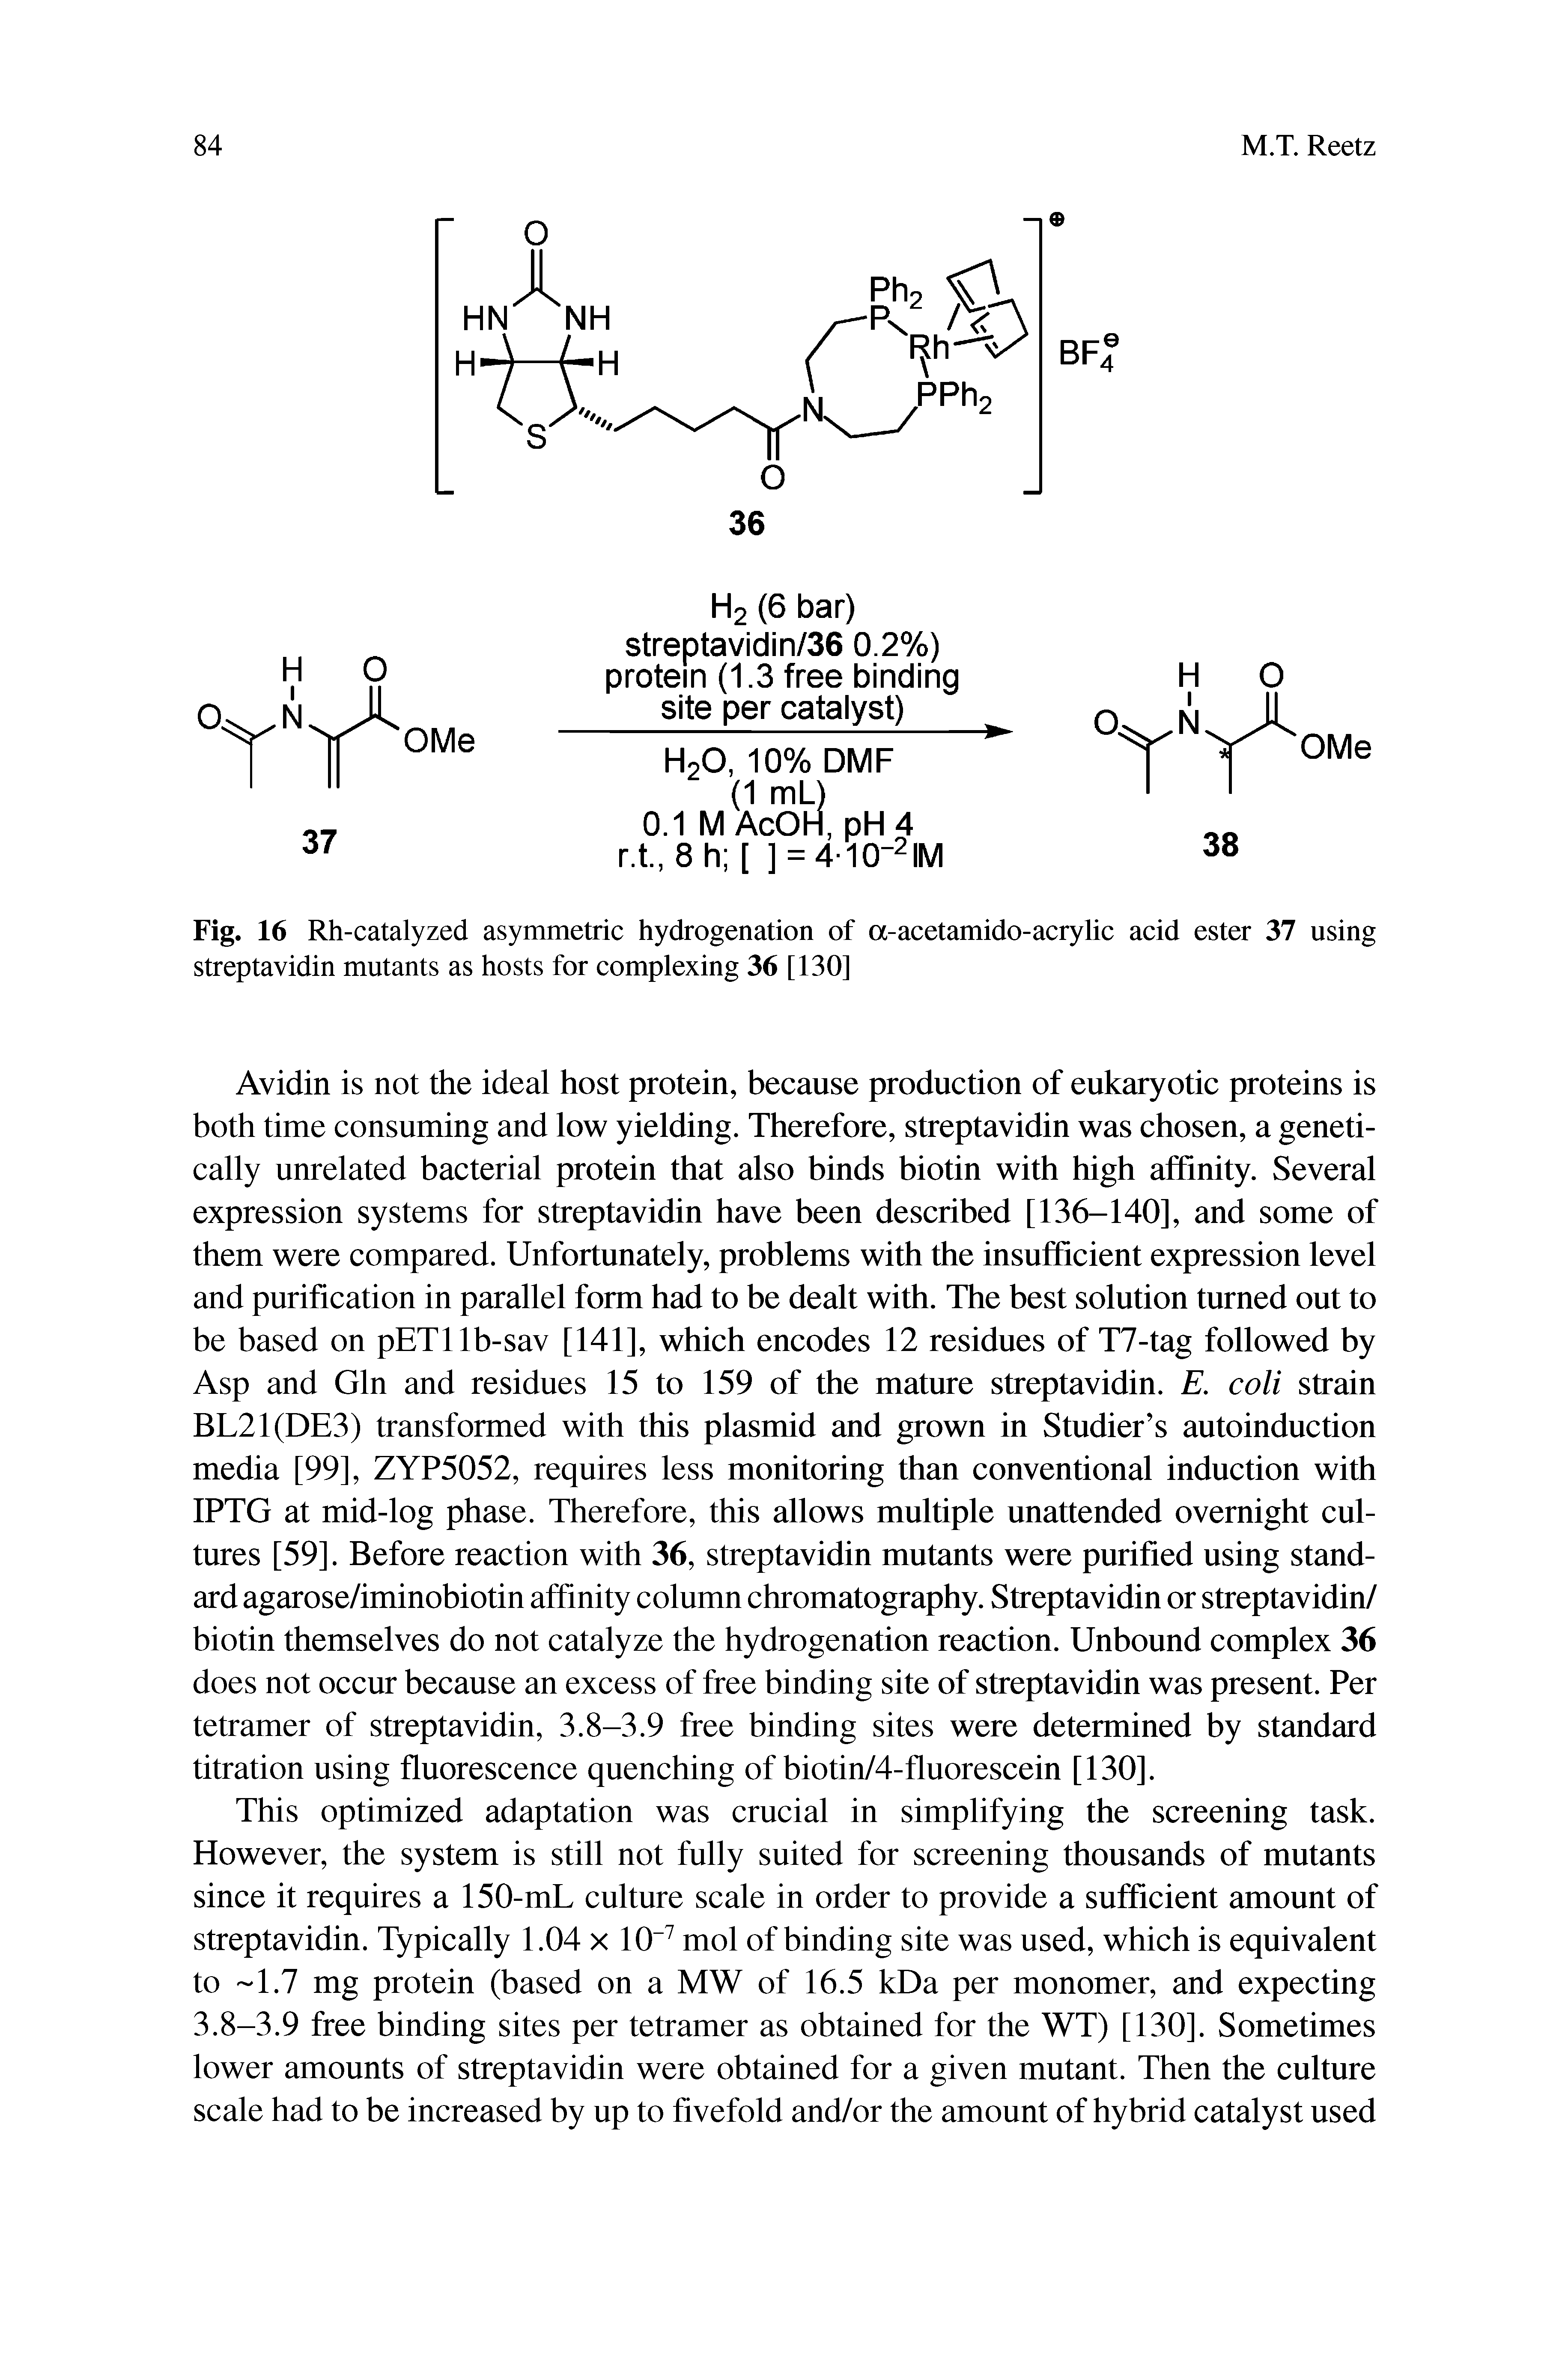 Fig. 16 Rh-catalyzed asymmetric hydrogenation of a-acetamido-acrylic acid ester 37 using streptavidin mutants as hosts for complexing 36 [130]...